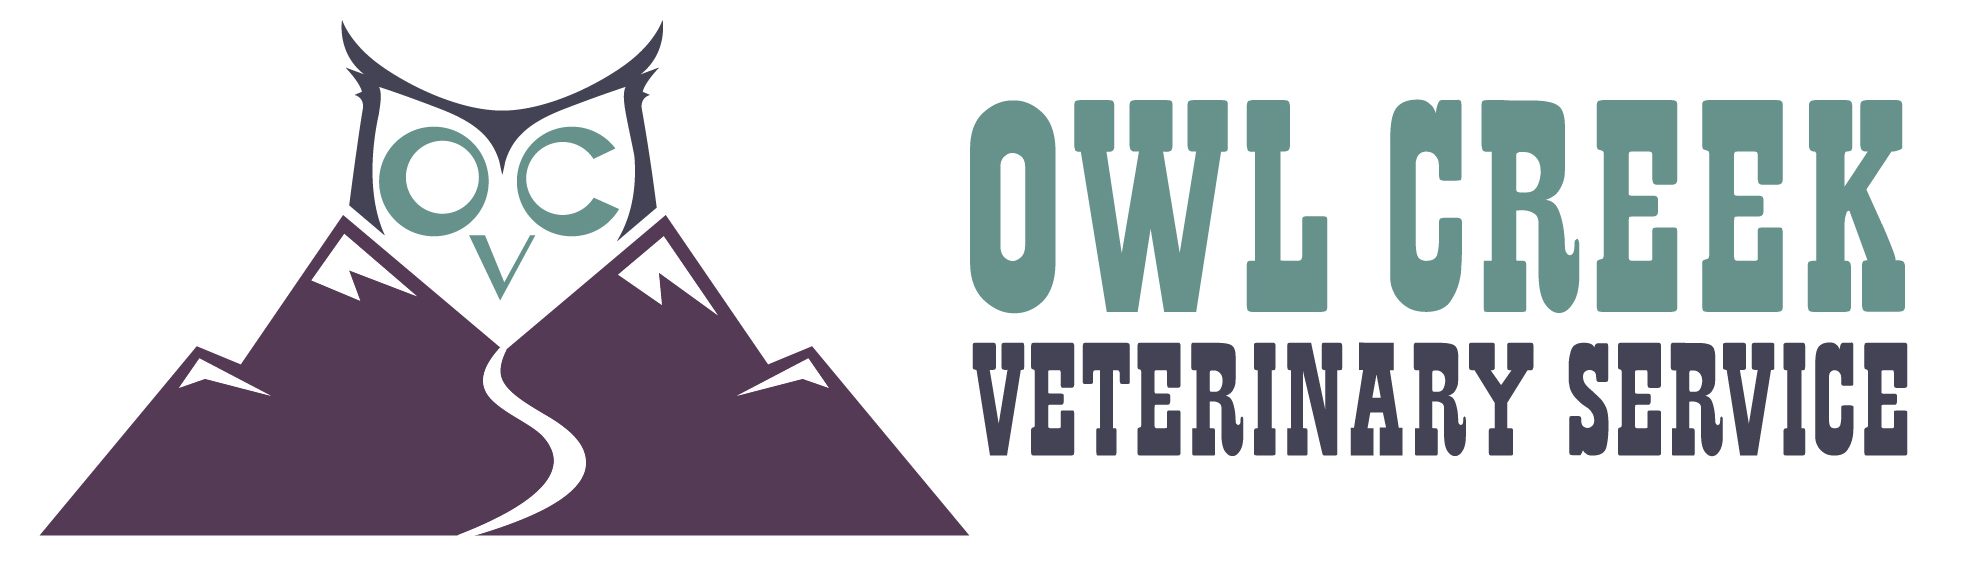 Owl Creek Veterinary Service